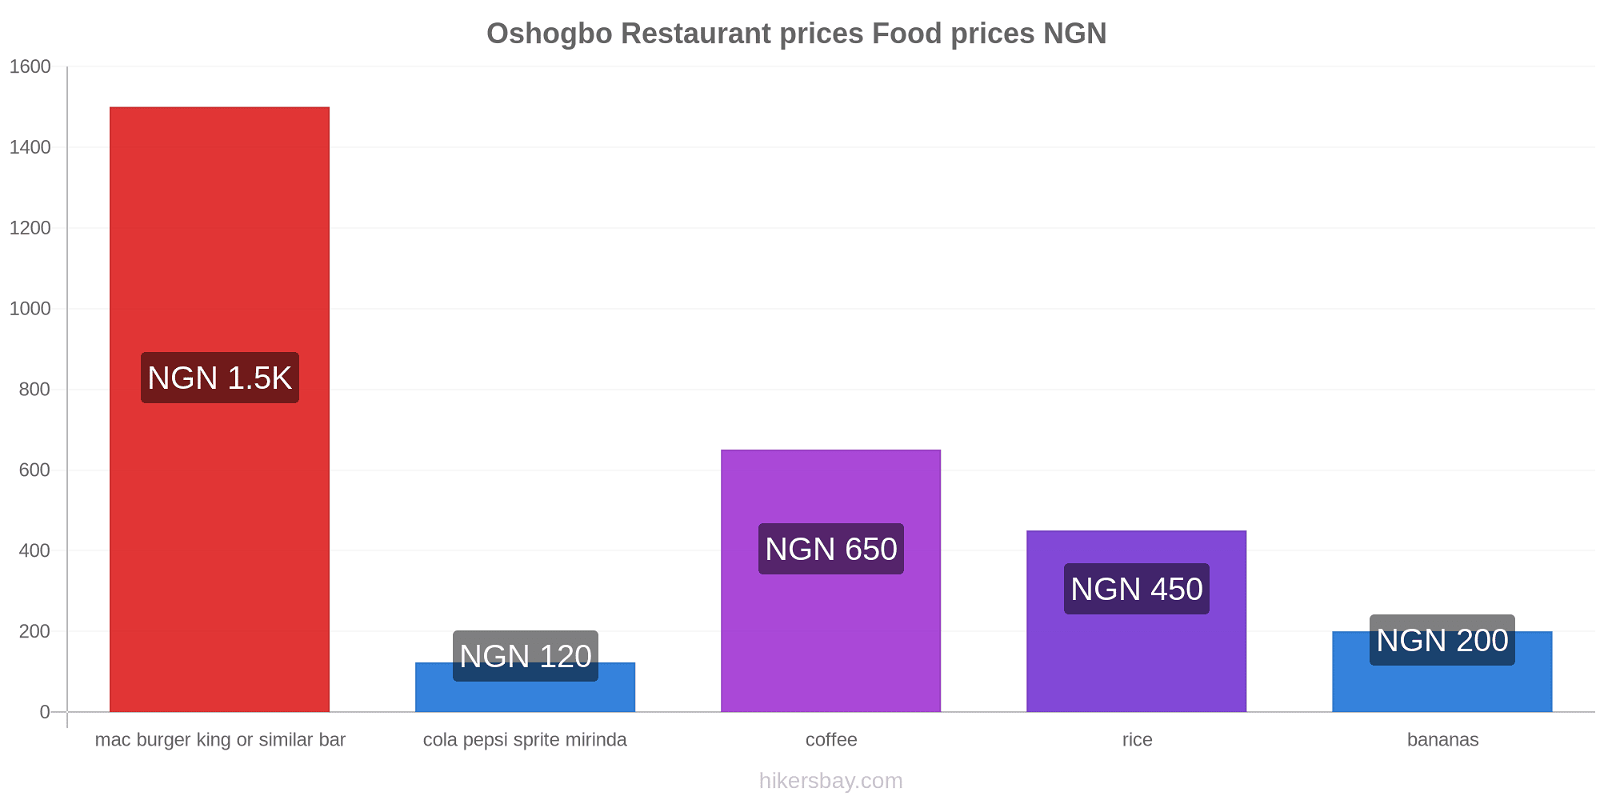 Oshogbo price changes hikersbay.com